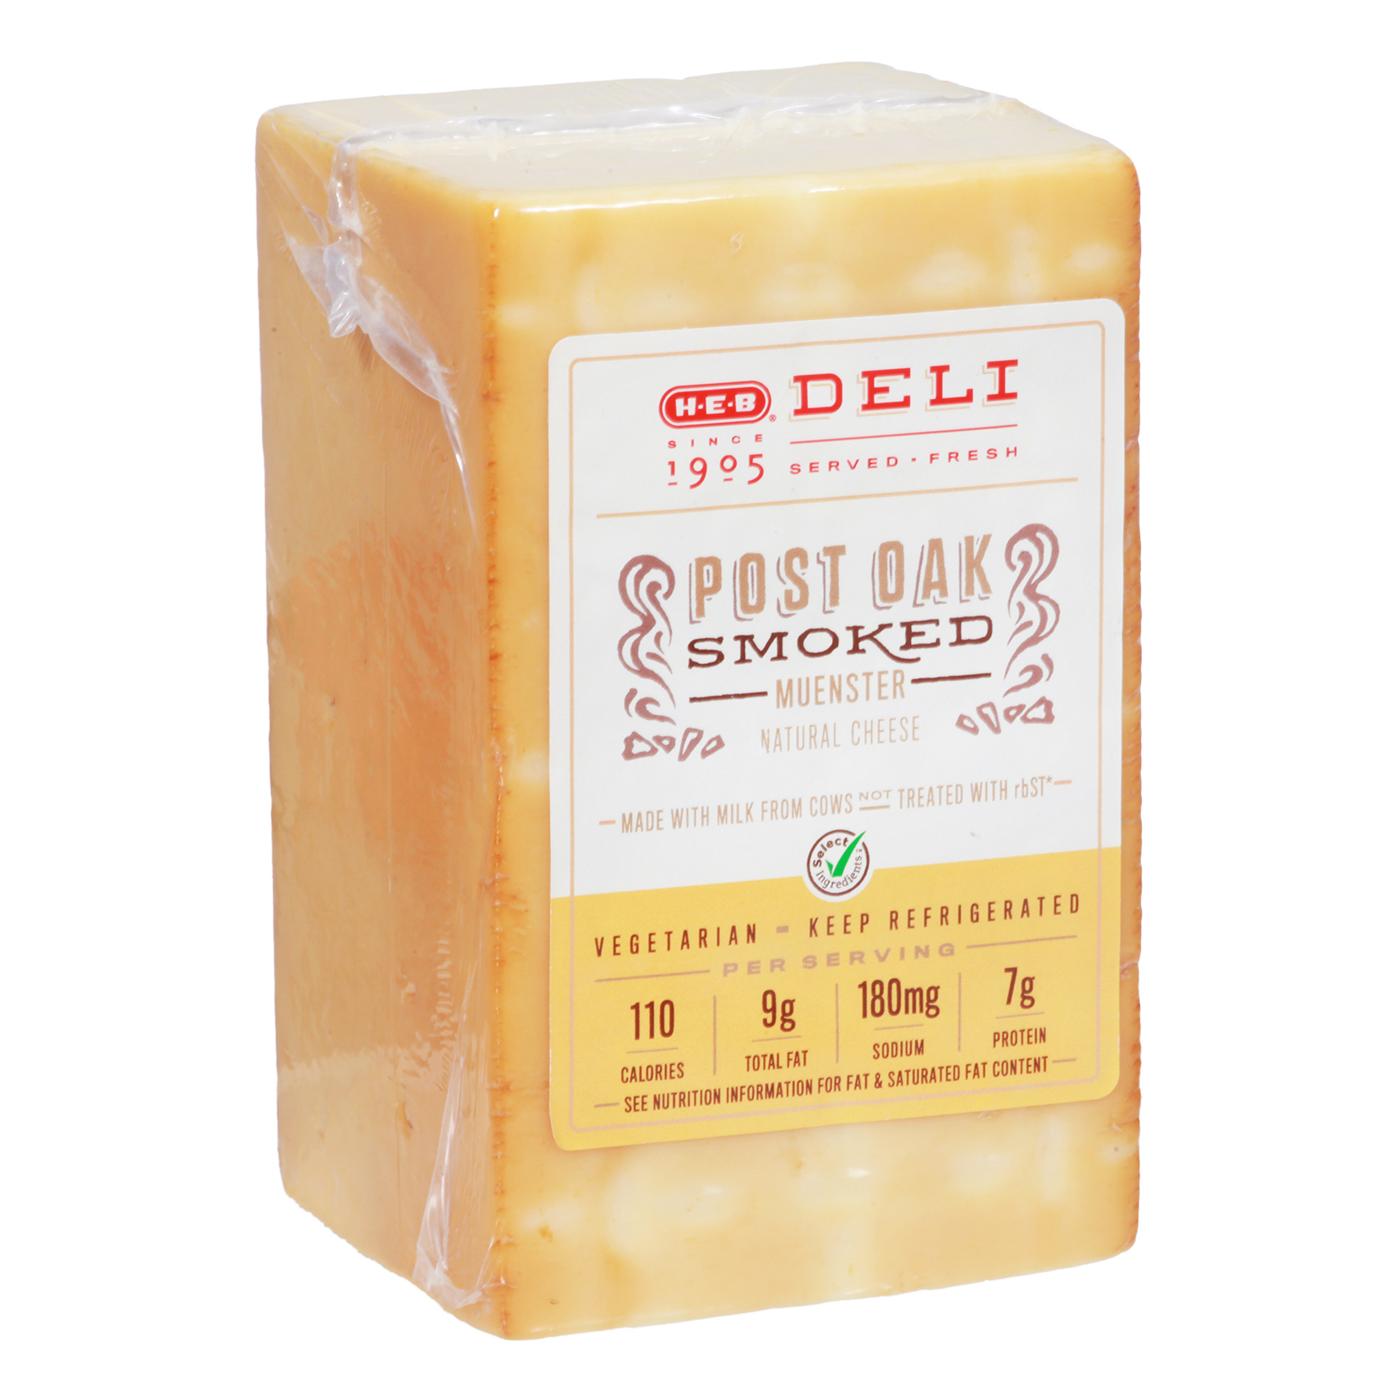 H-E-B Deli Sliced Post Oak Smoked Muenster Cheese; image 2 of 2